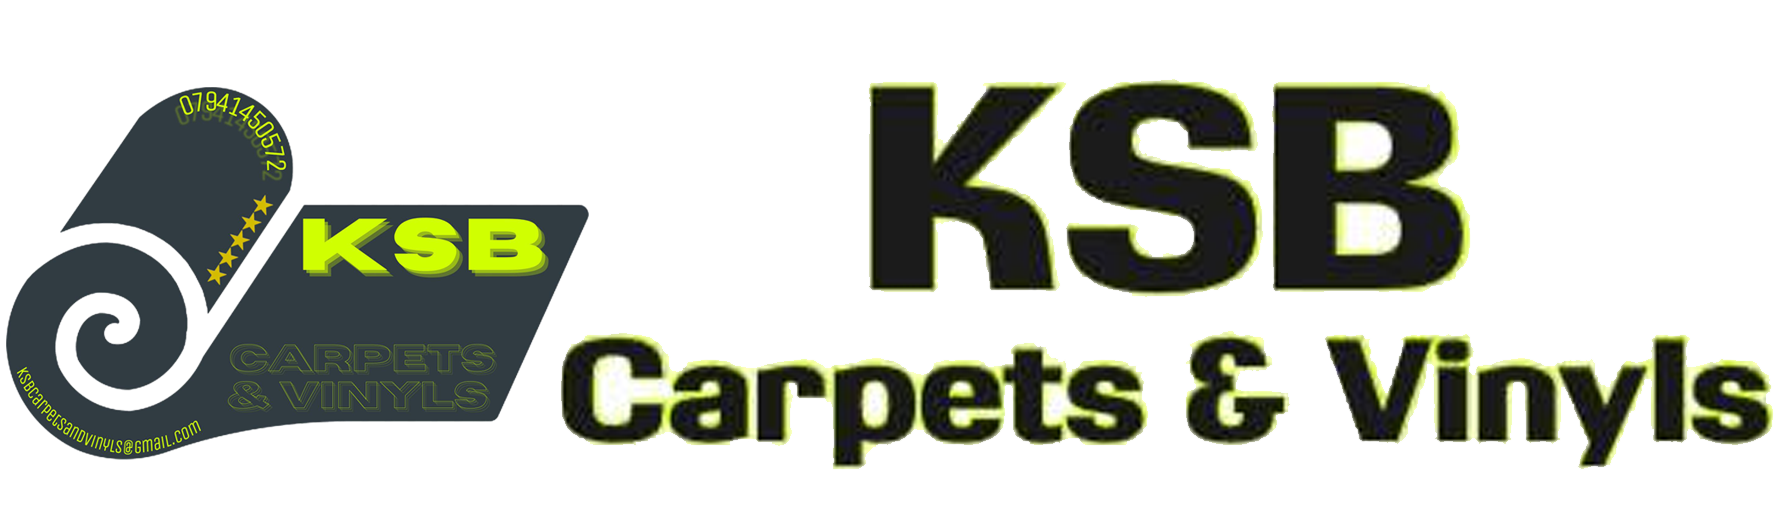 KSB carpets & vinyls logo